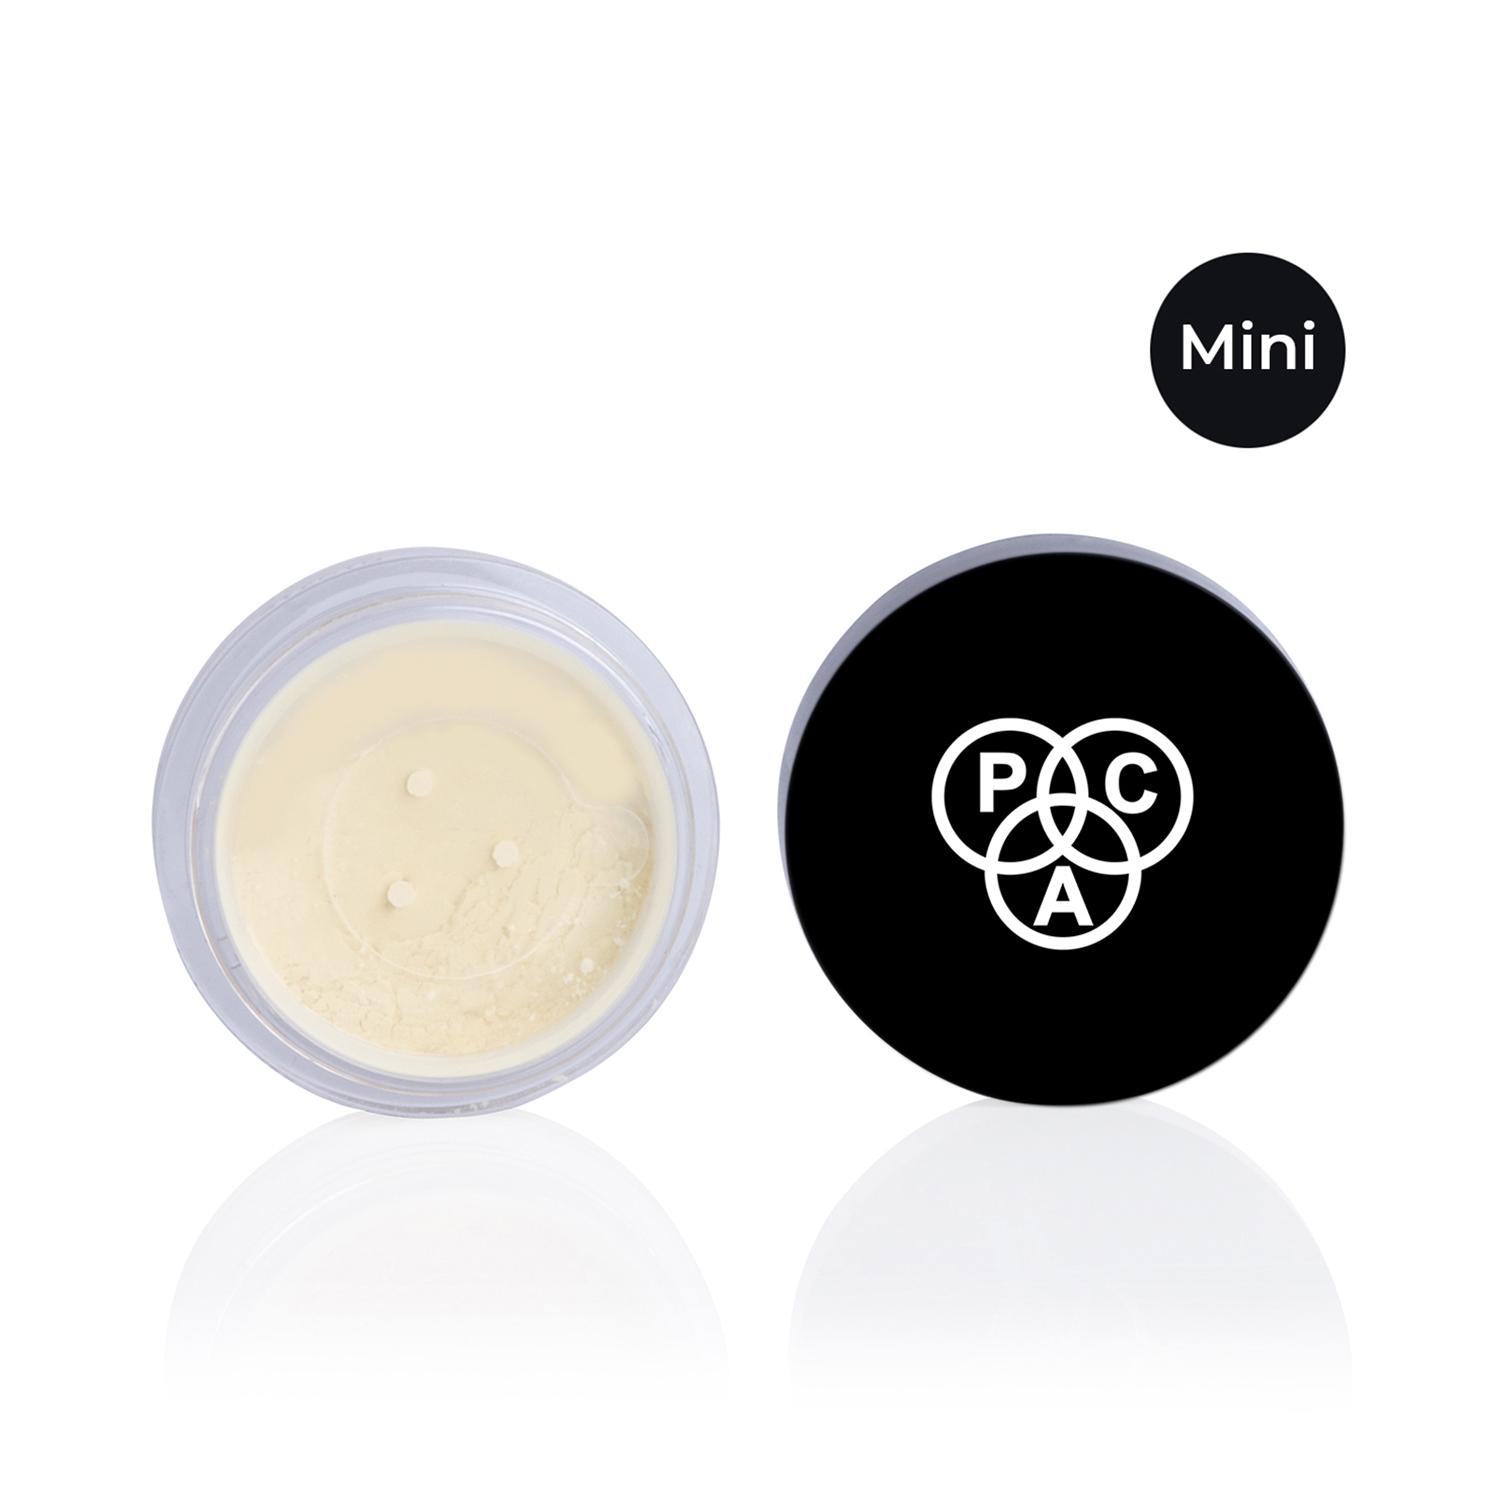 PAC | PAC Translucent Powder Mini - 02 Shade (2g)